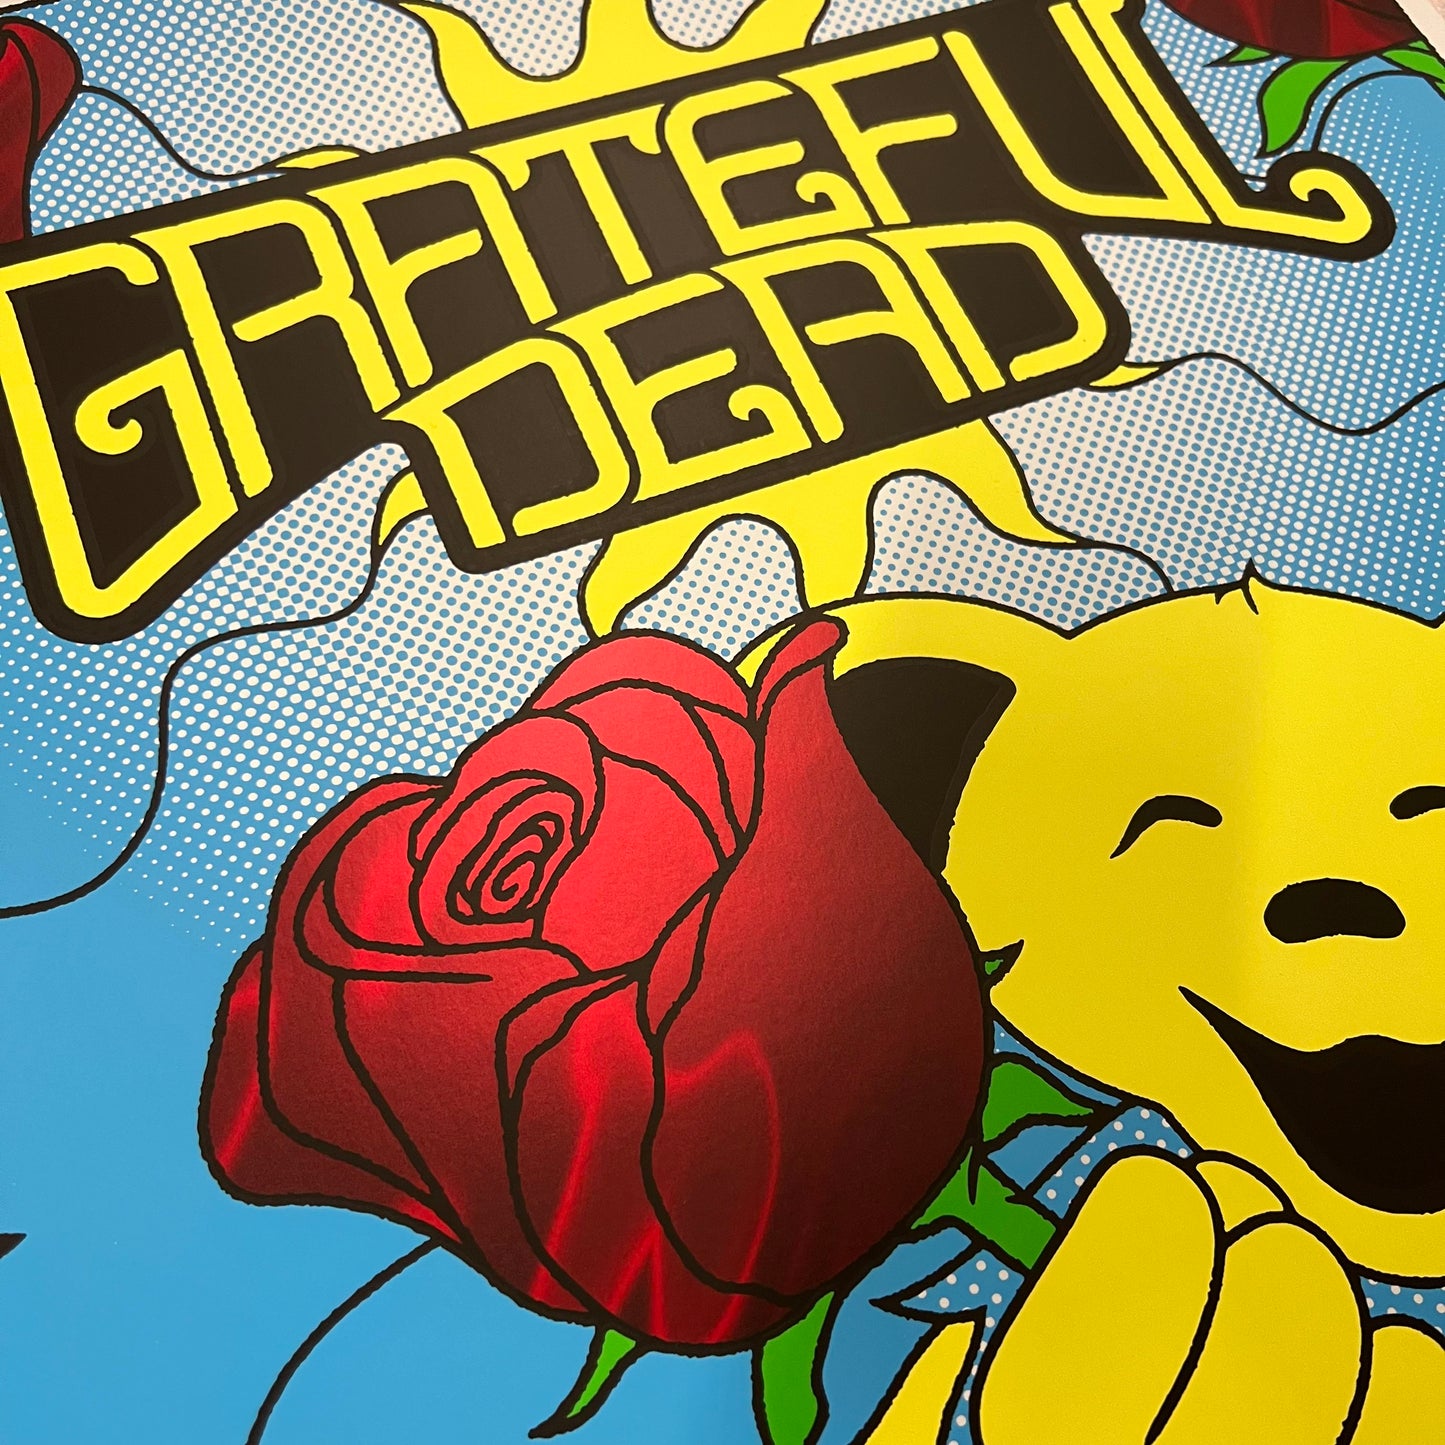 Wren Design "Grateful Dead" Foil Edition